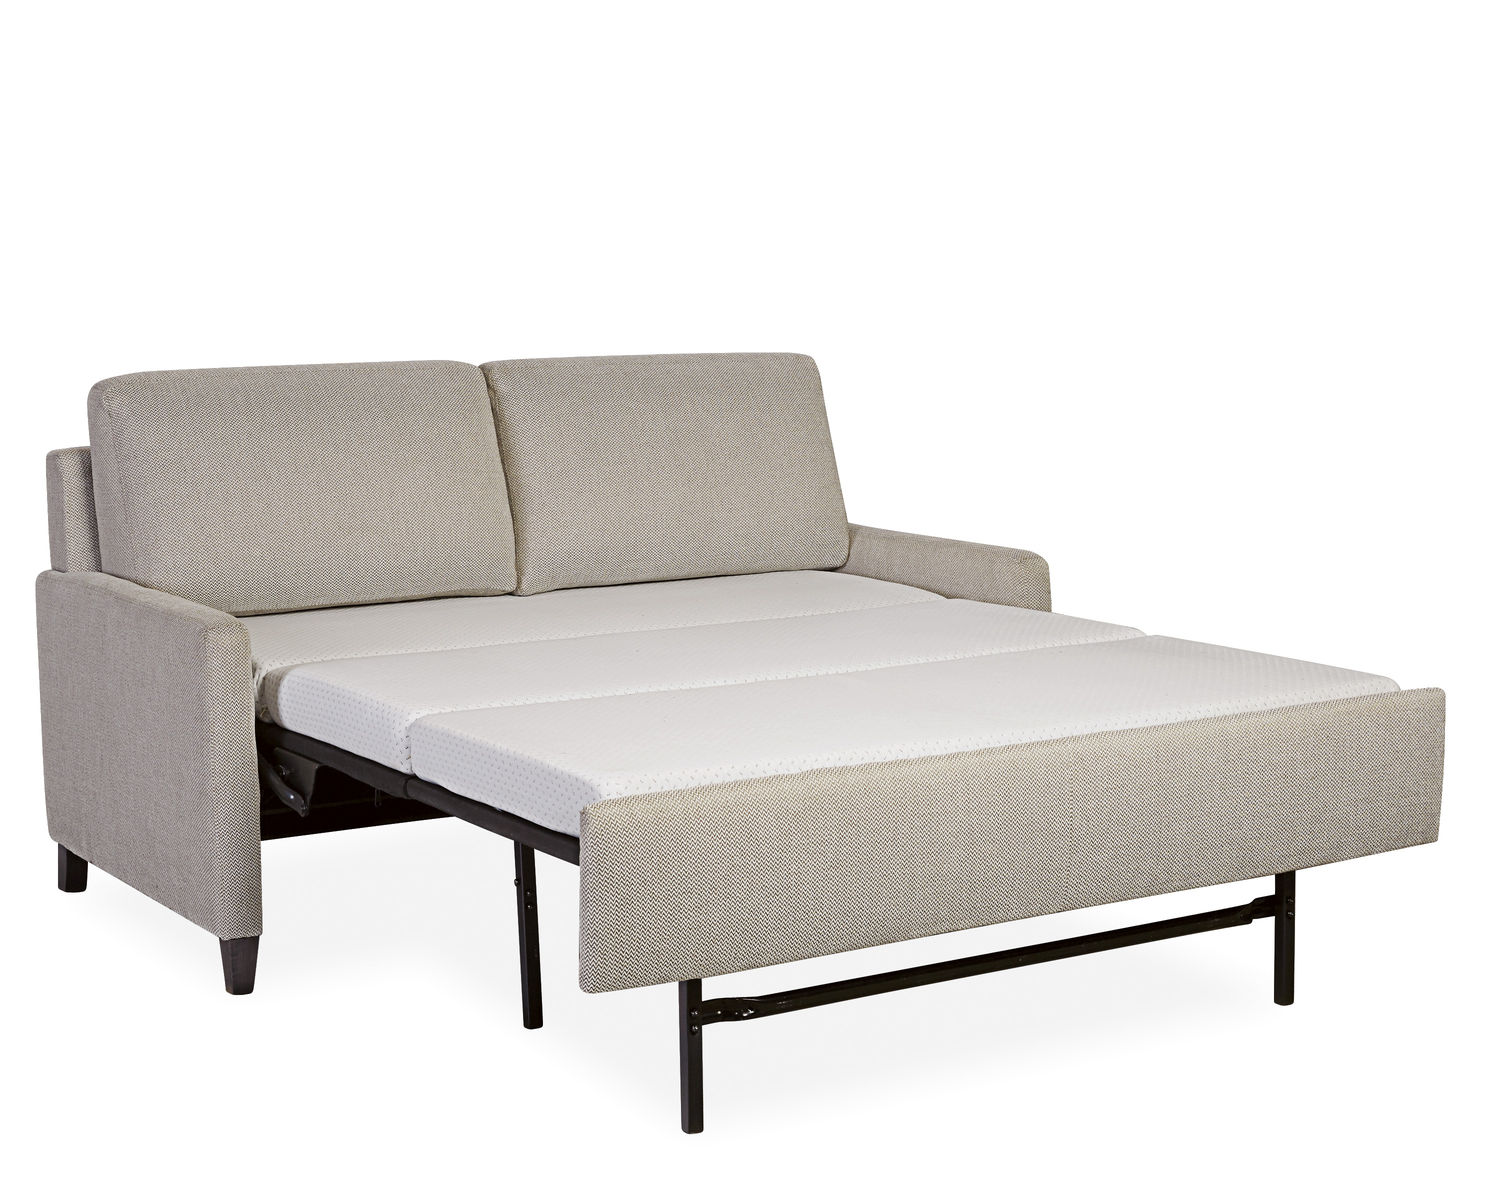 solid platform foam mattress sleeper sofa